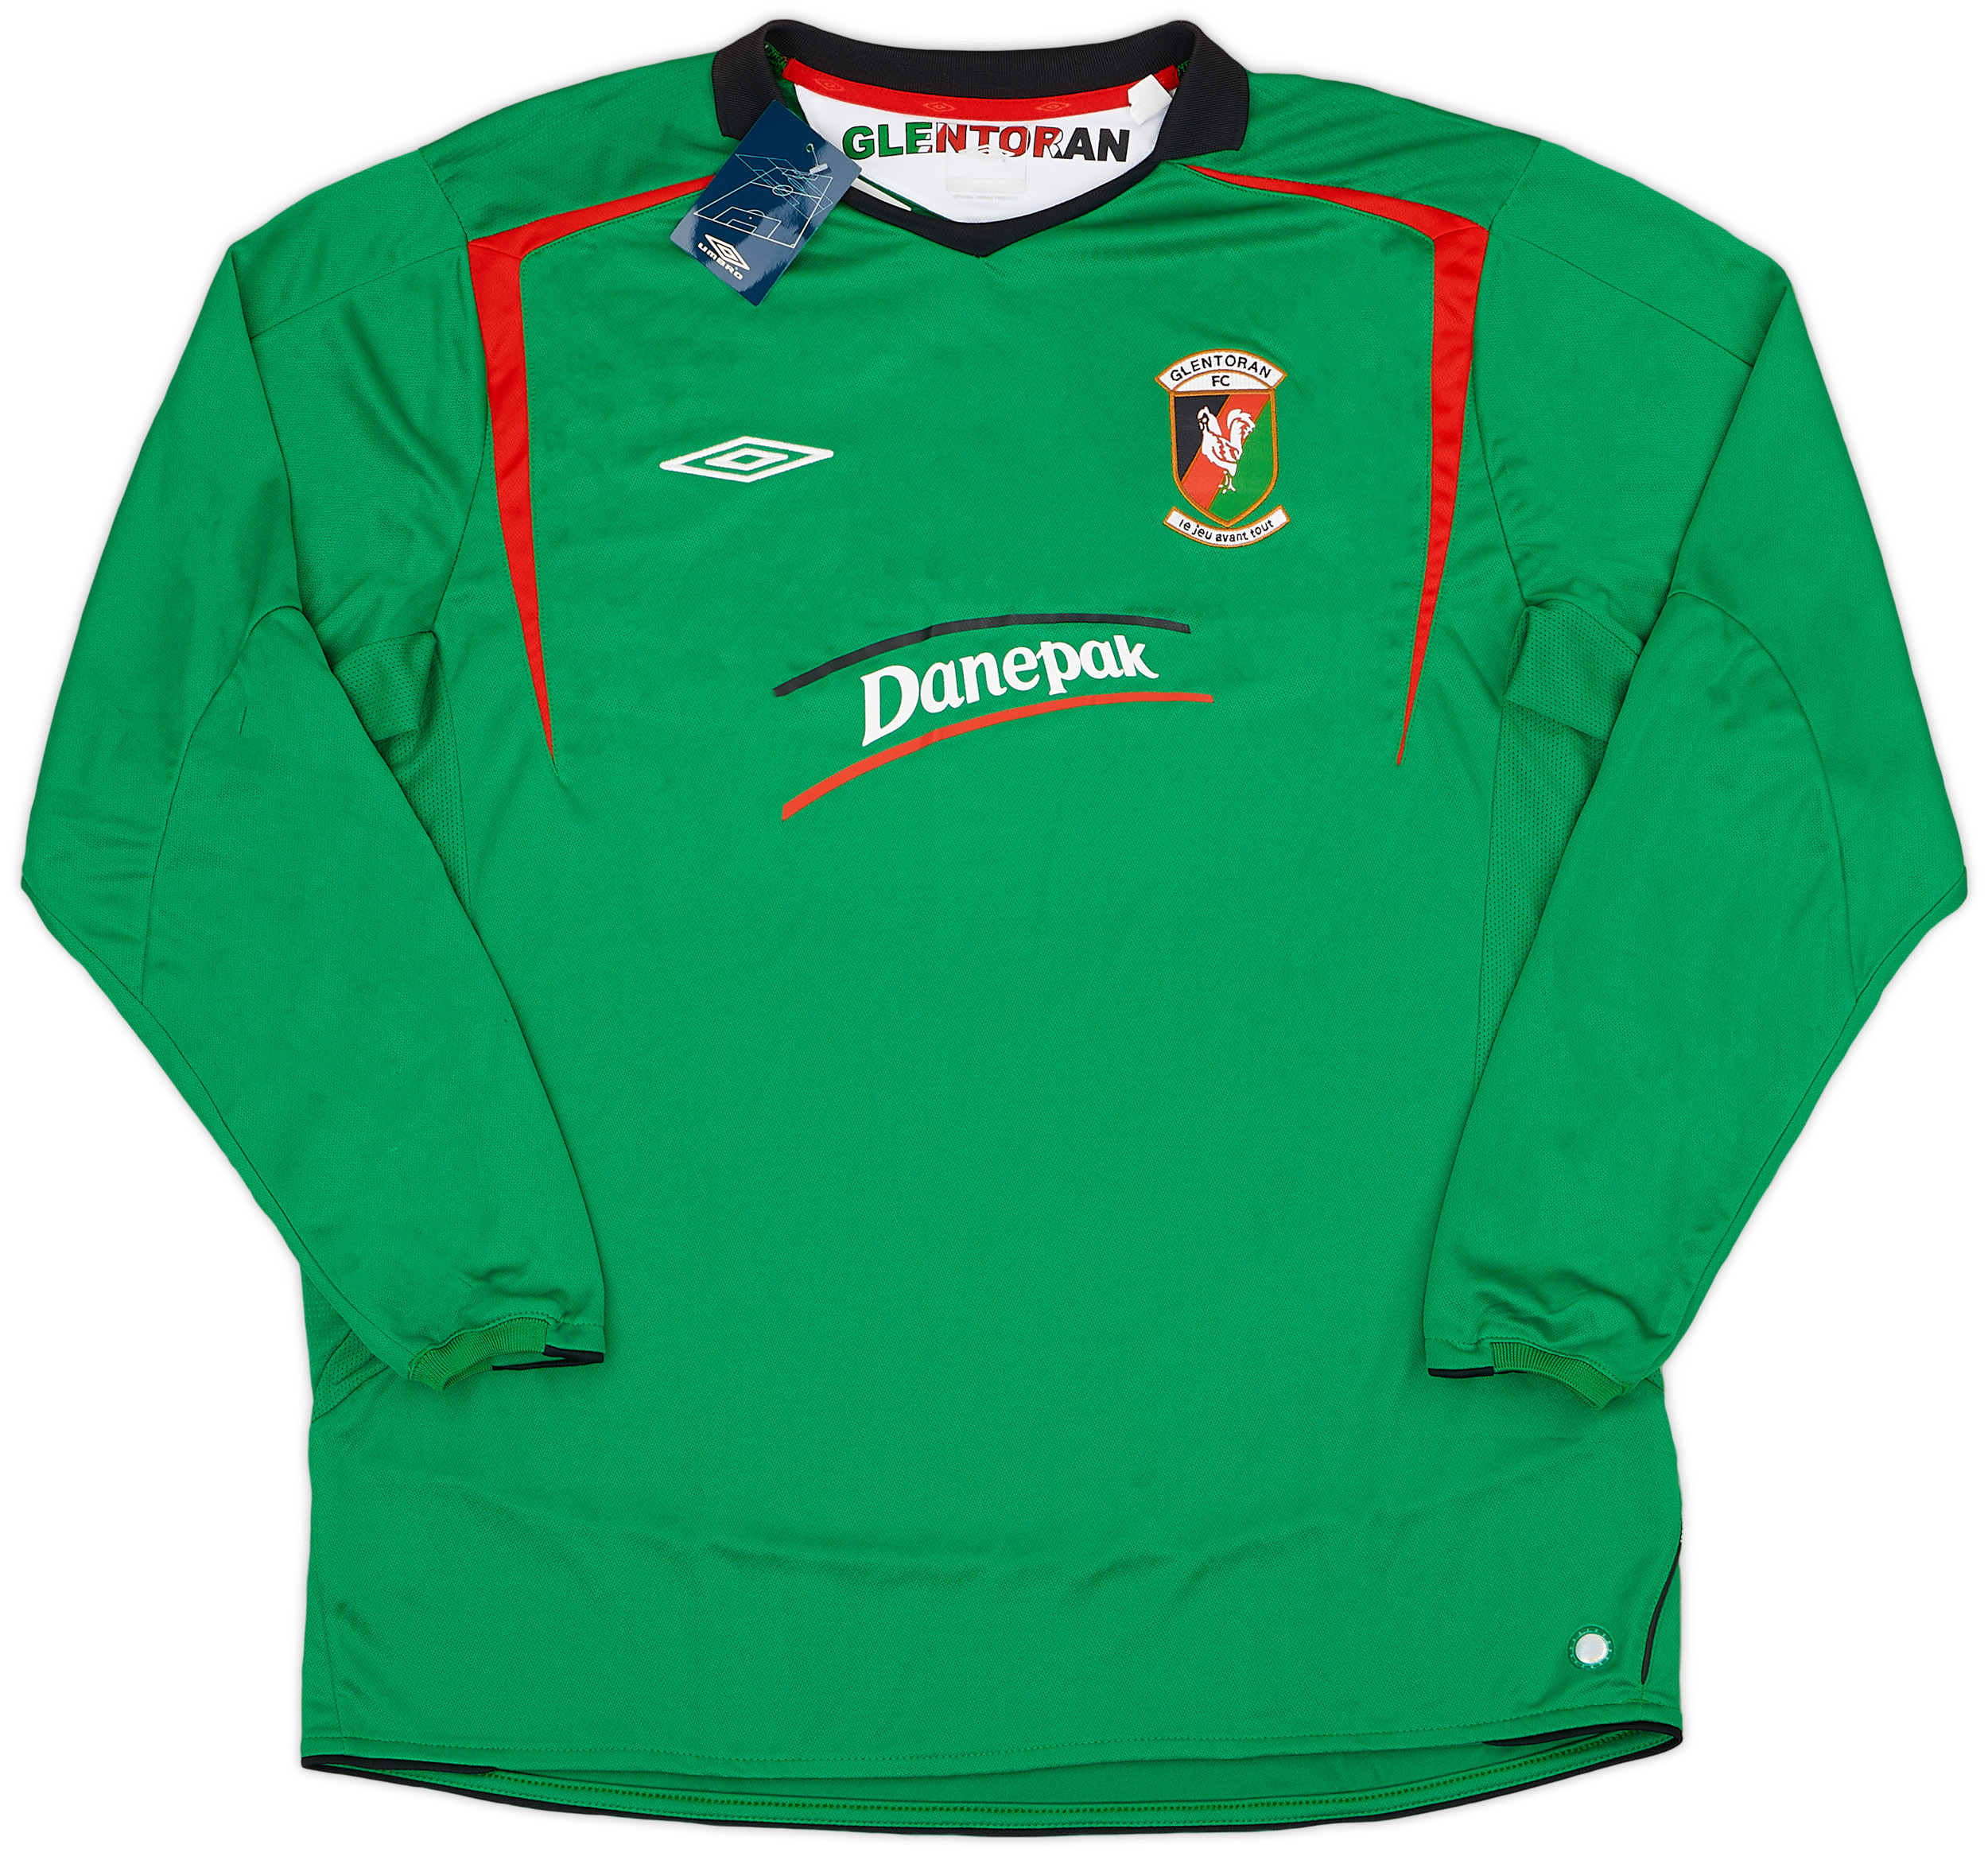 2006-07 Glentoran Home Shirt ()